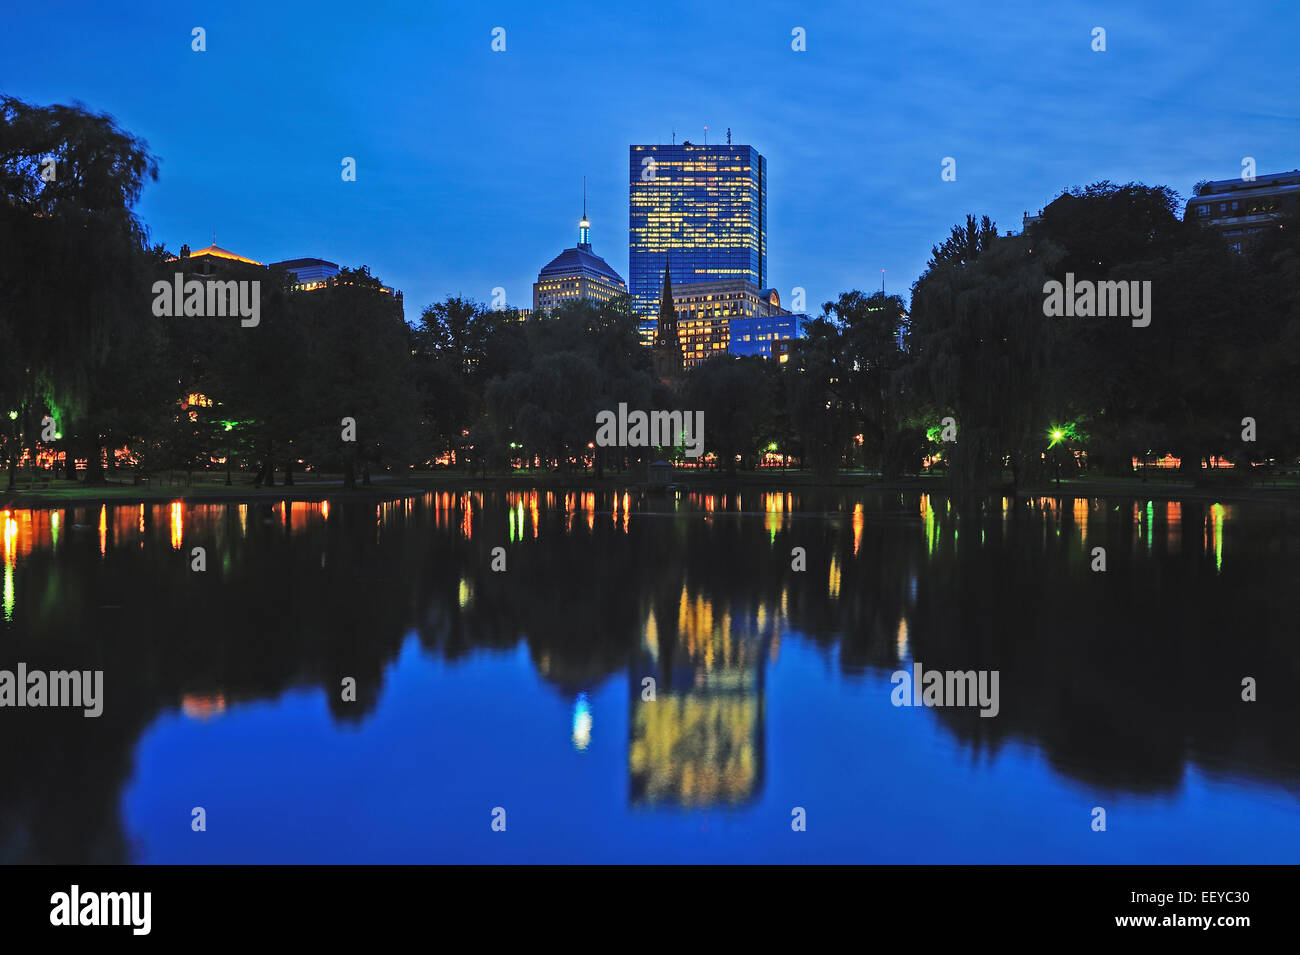 USA, Massachusetts, Boston, Skyline of Copley Square Boston reflecting in pond of Public Gardens at dusk Stock Photo